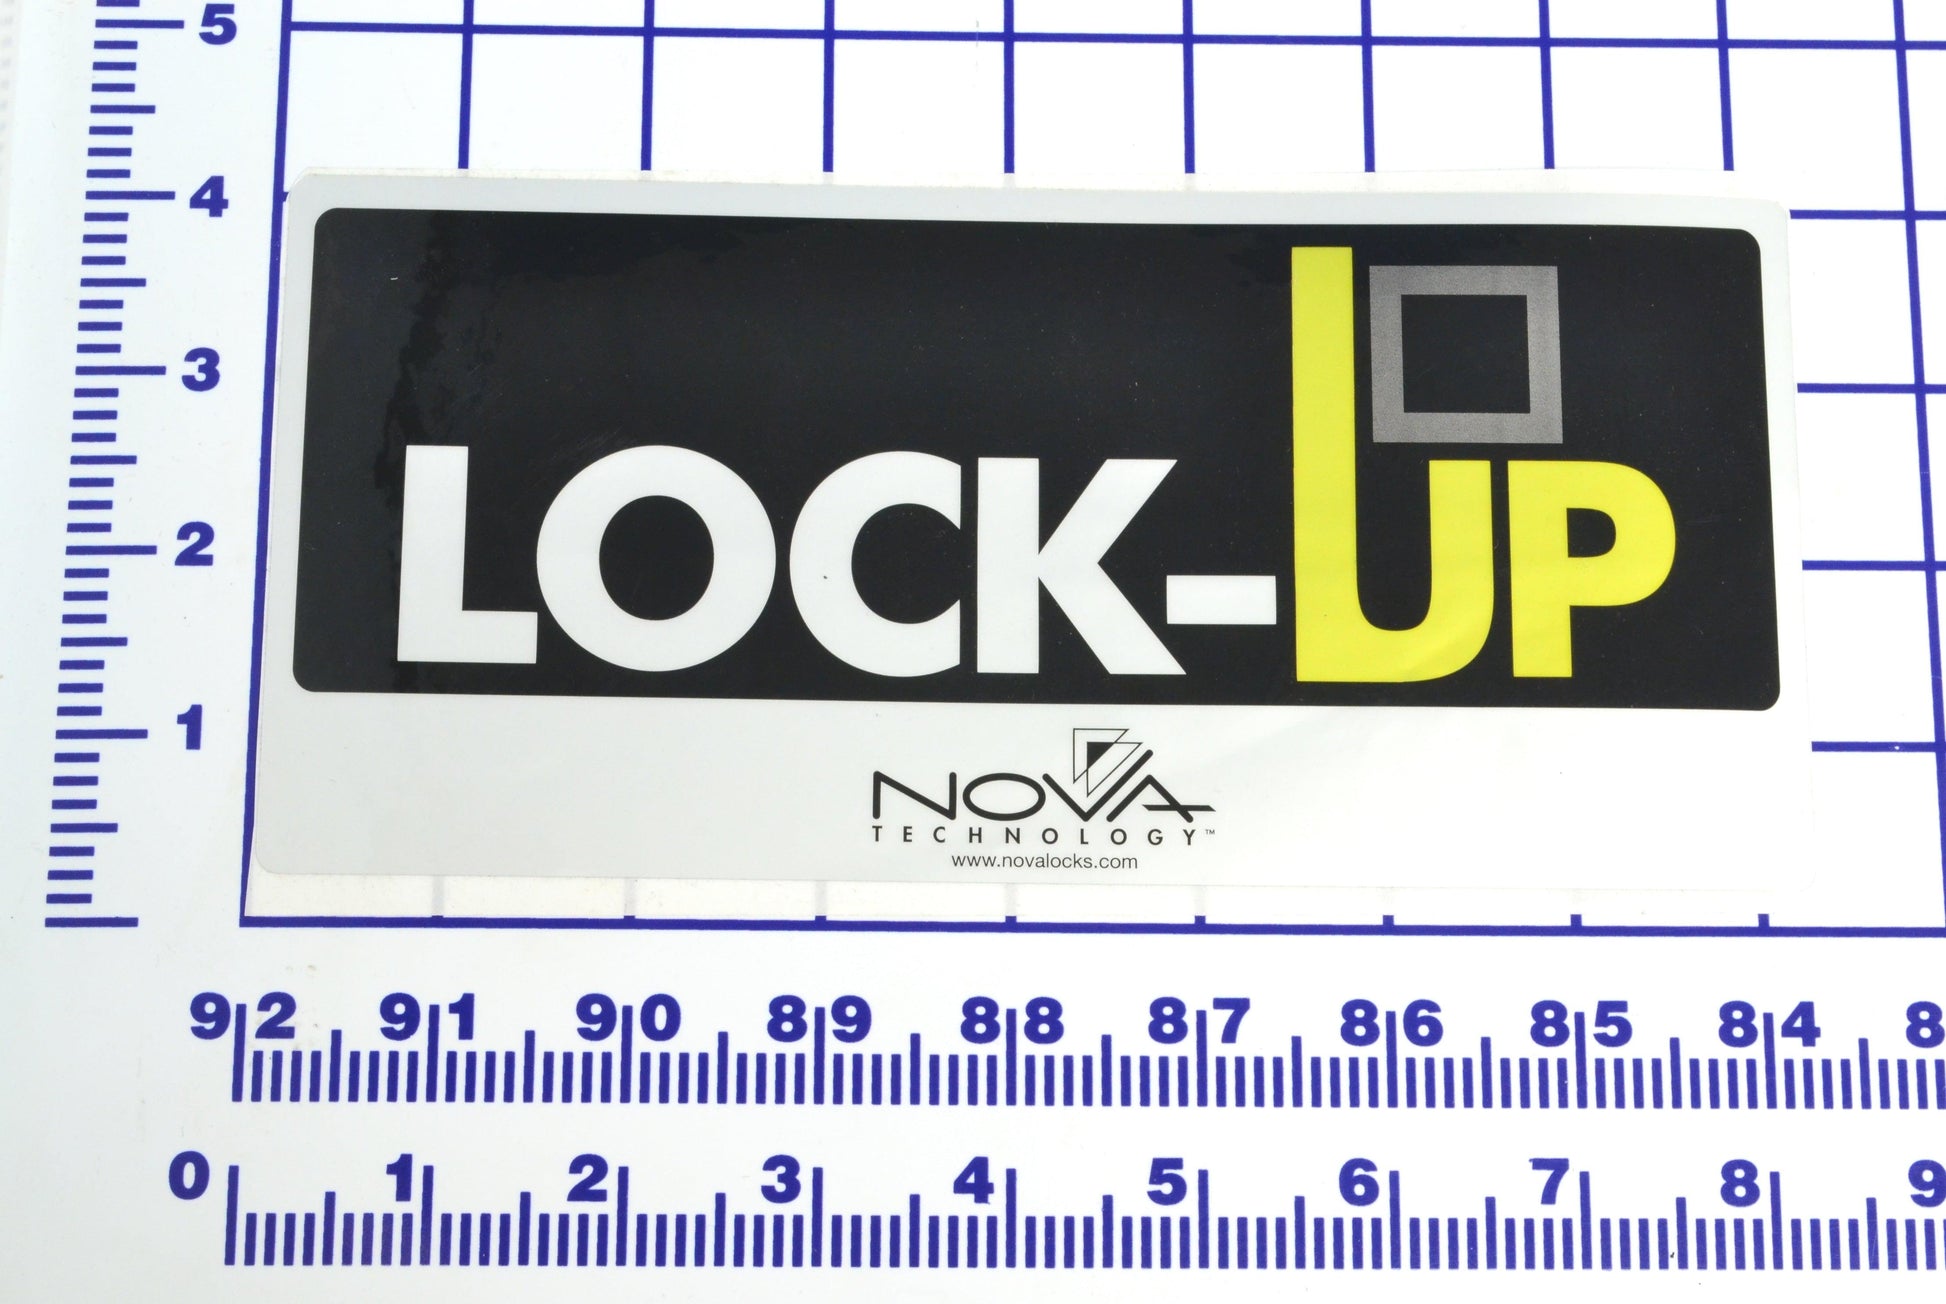 MF4-148-000 "Nova Lock-Up" Horizontal Decal - Nova